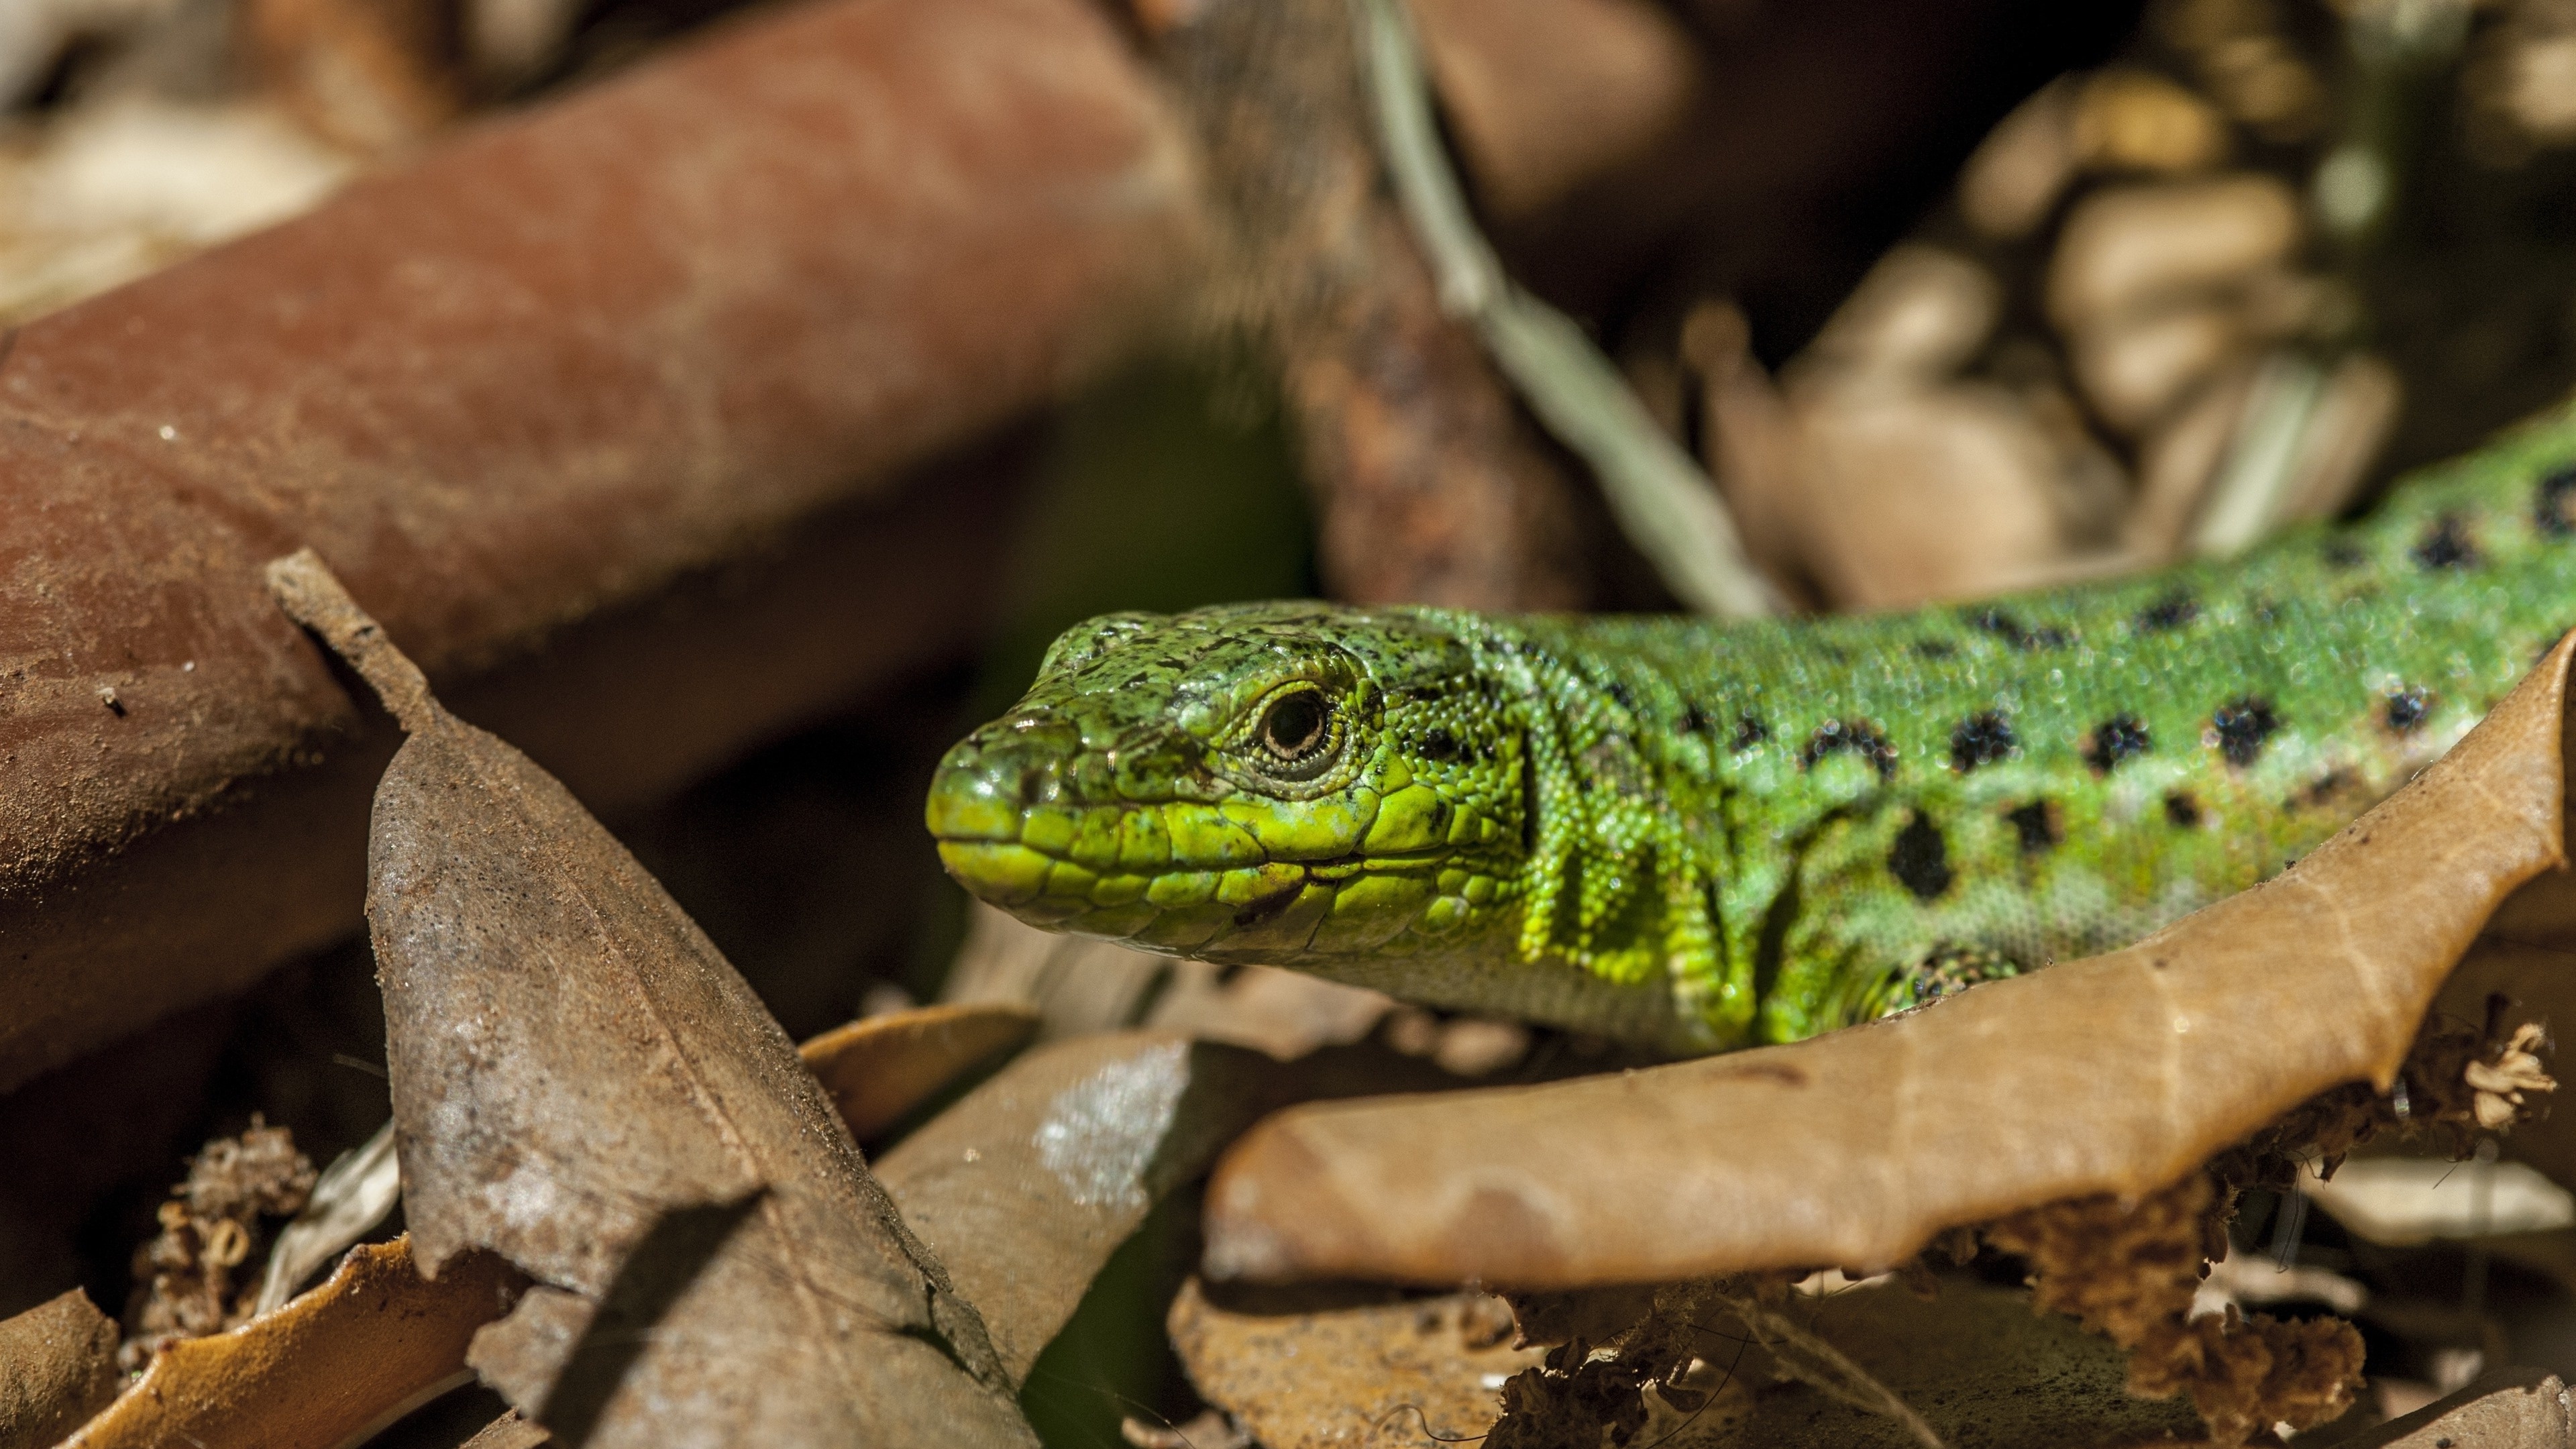 Green lizard, Reptile species, Leafy environment, Close-up perspective, 3840x2160 4K Desktop